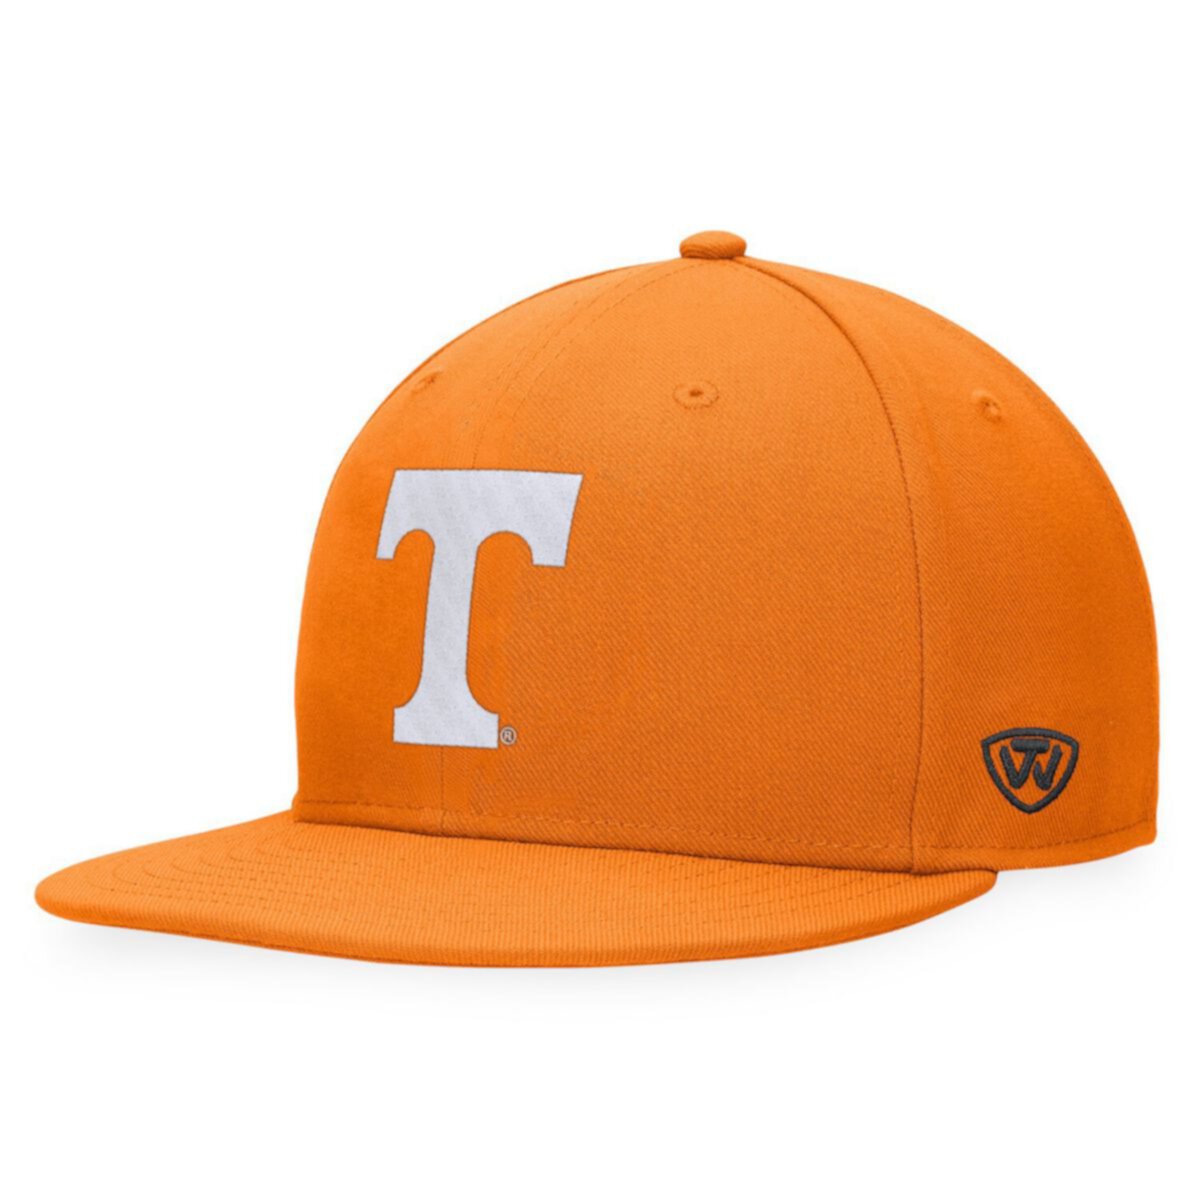 Мужская приталенная шляпа Top of the World Tennessee Orange Tennessee Volunteers Top of the World